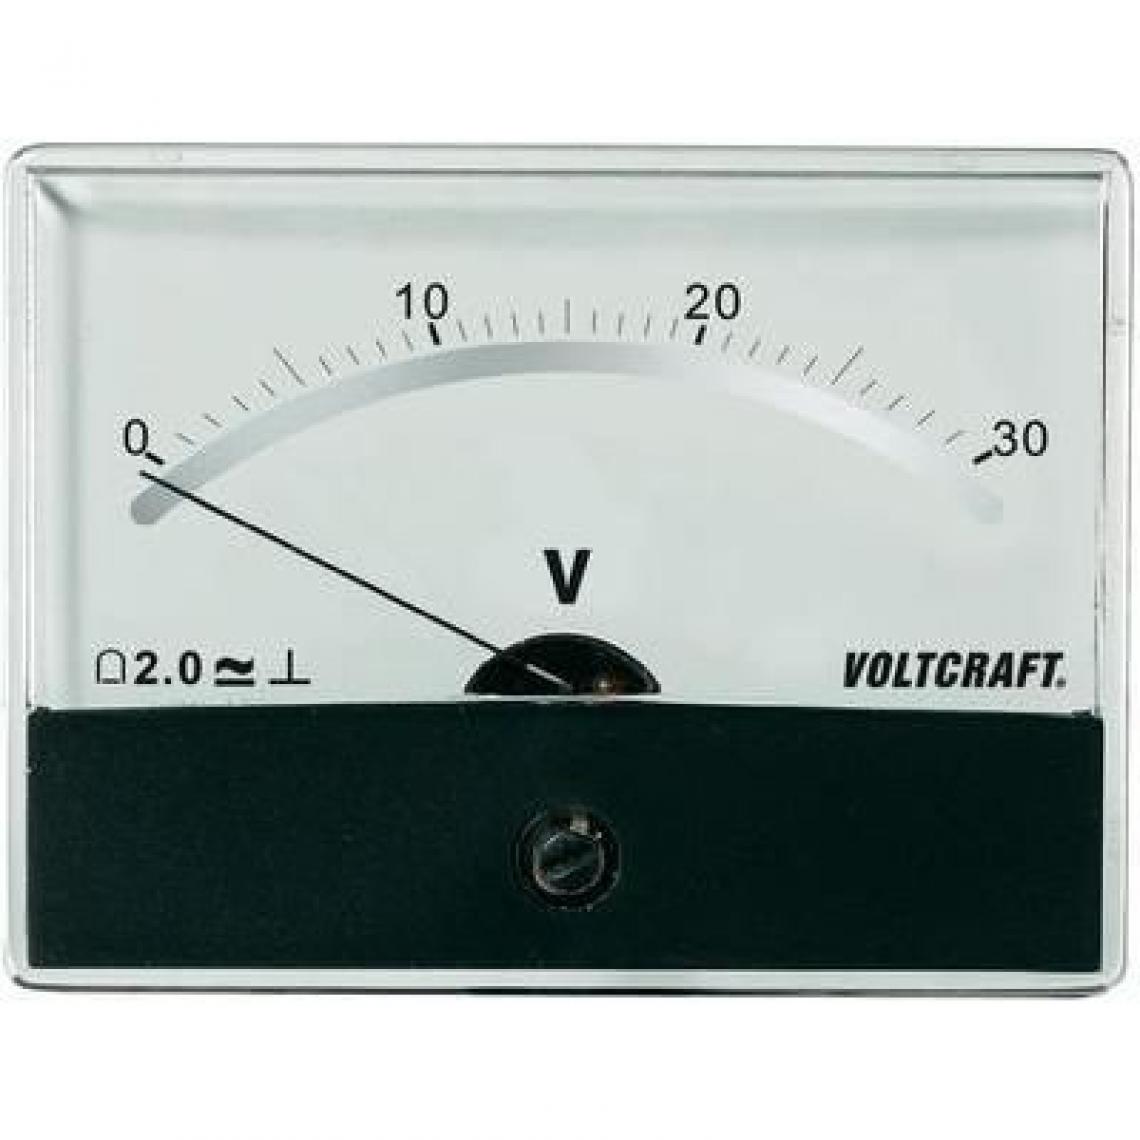 Voltcraft - Instrument de mesure analogique à encastrer AM-86X65/30V/DC VOLTCRAFT - Appareils de mesure